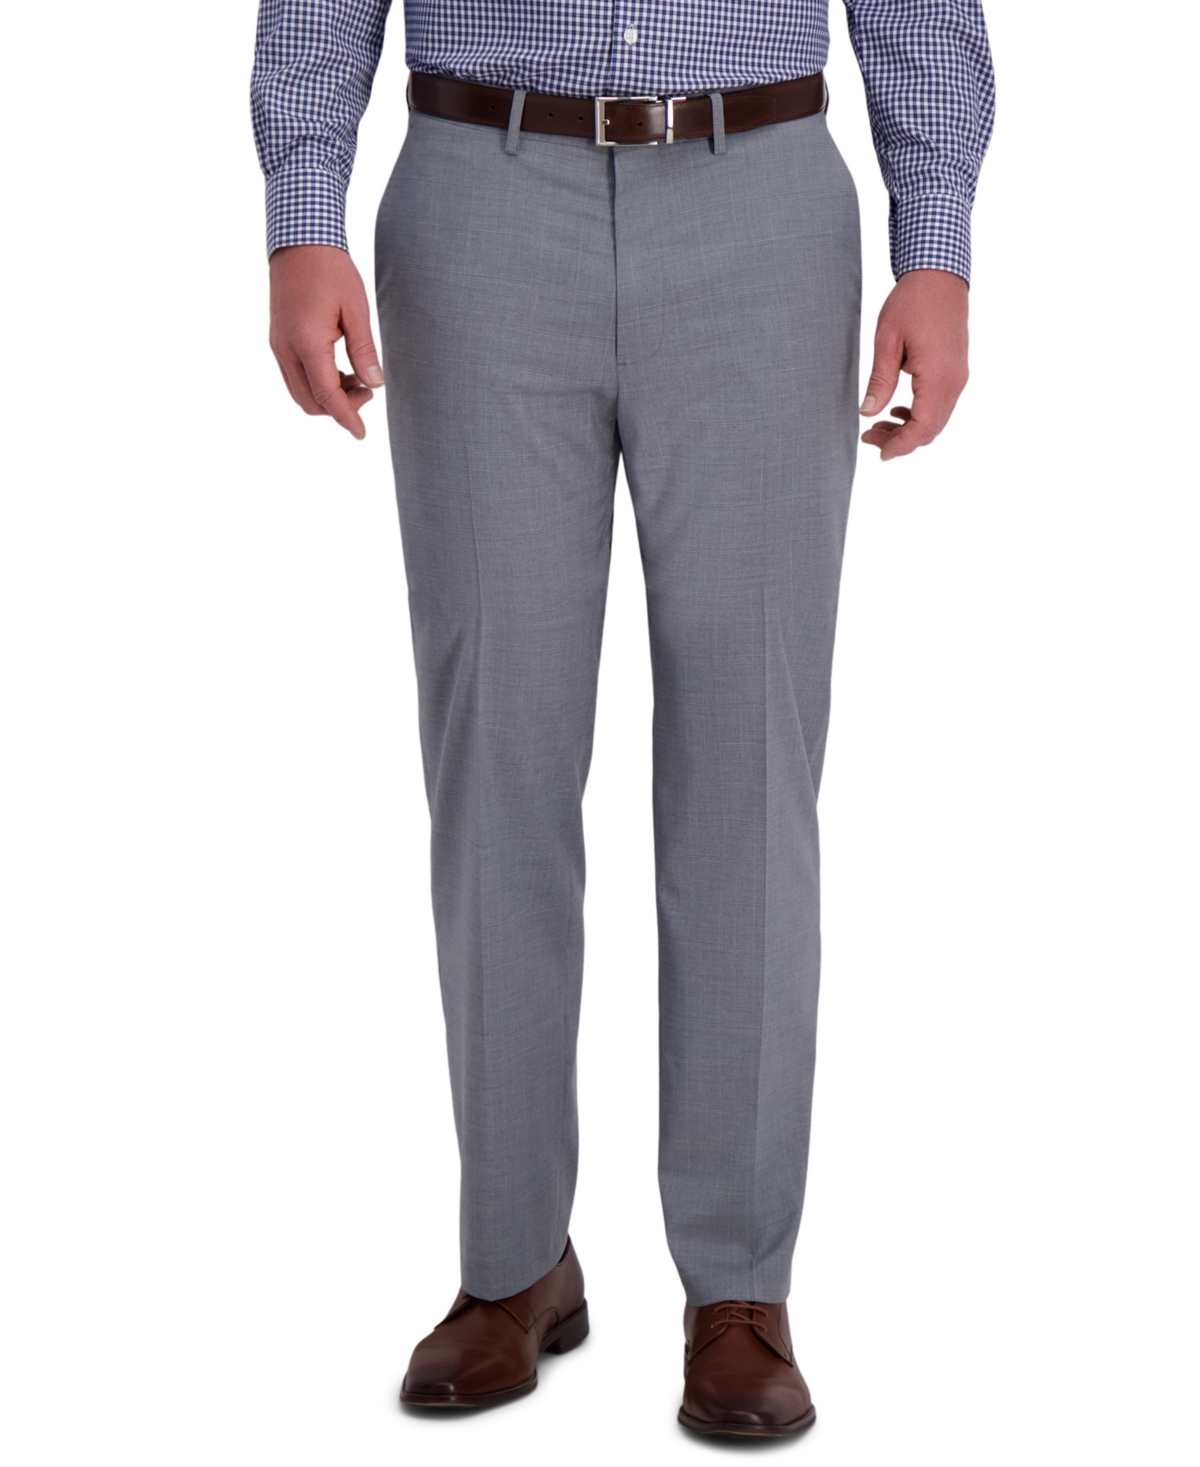 J.m. Haggar Men's 4-Way Stretch Textured Plaid Classic Fit Flat Front Performance Dress Pant - Grey